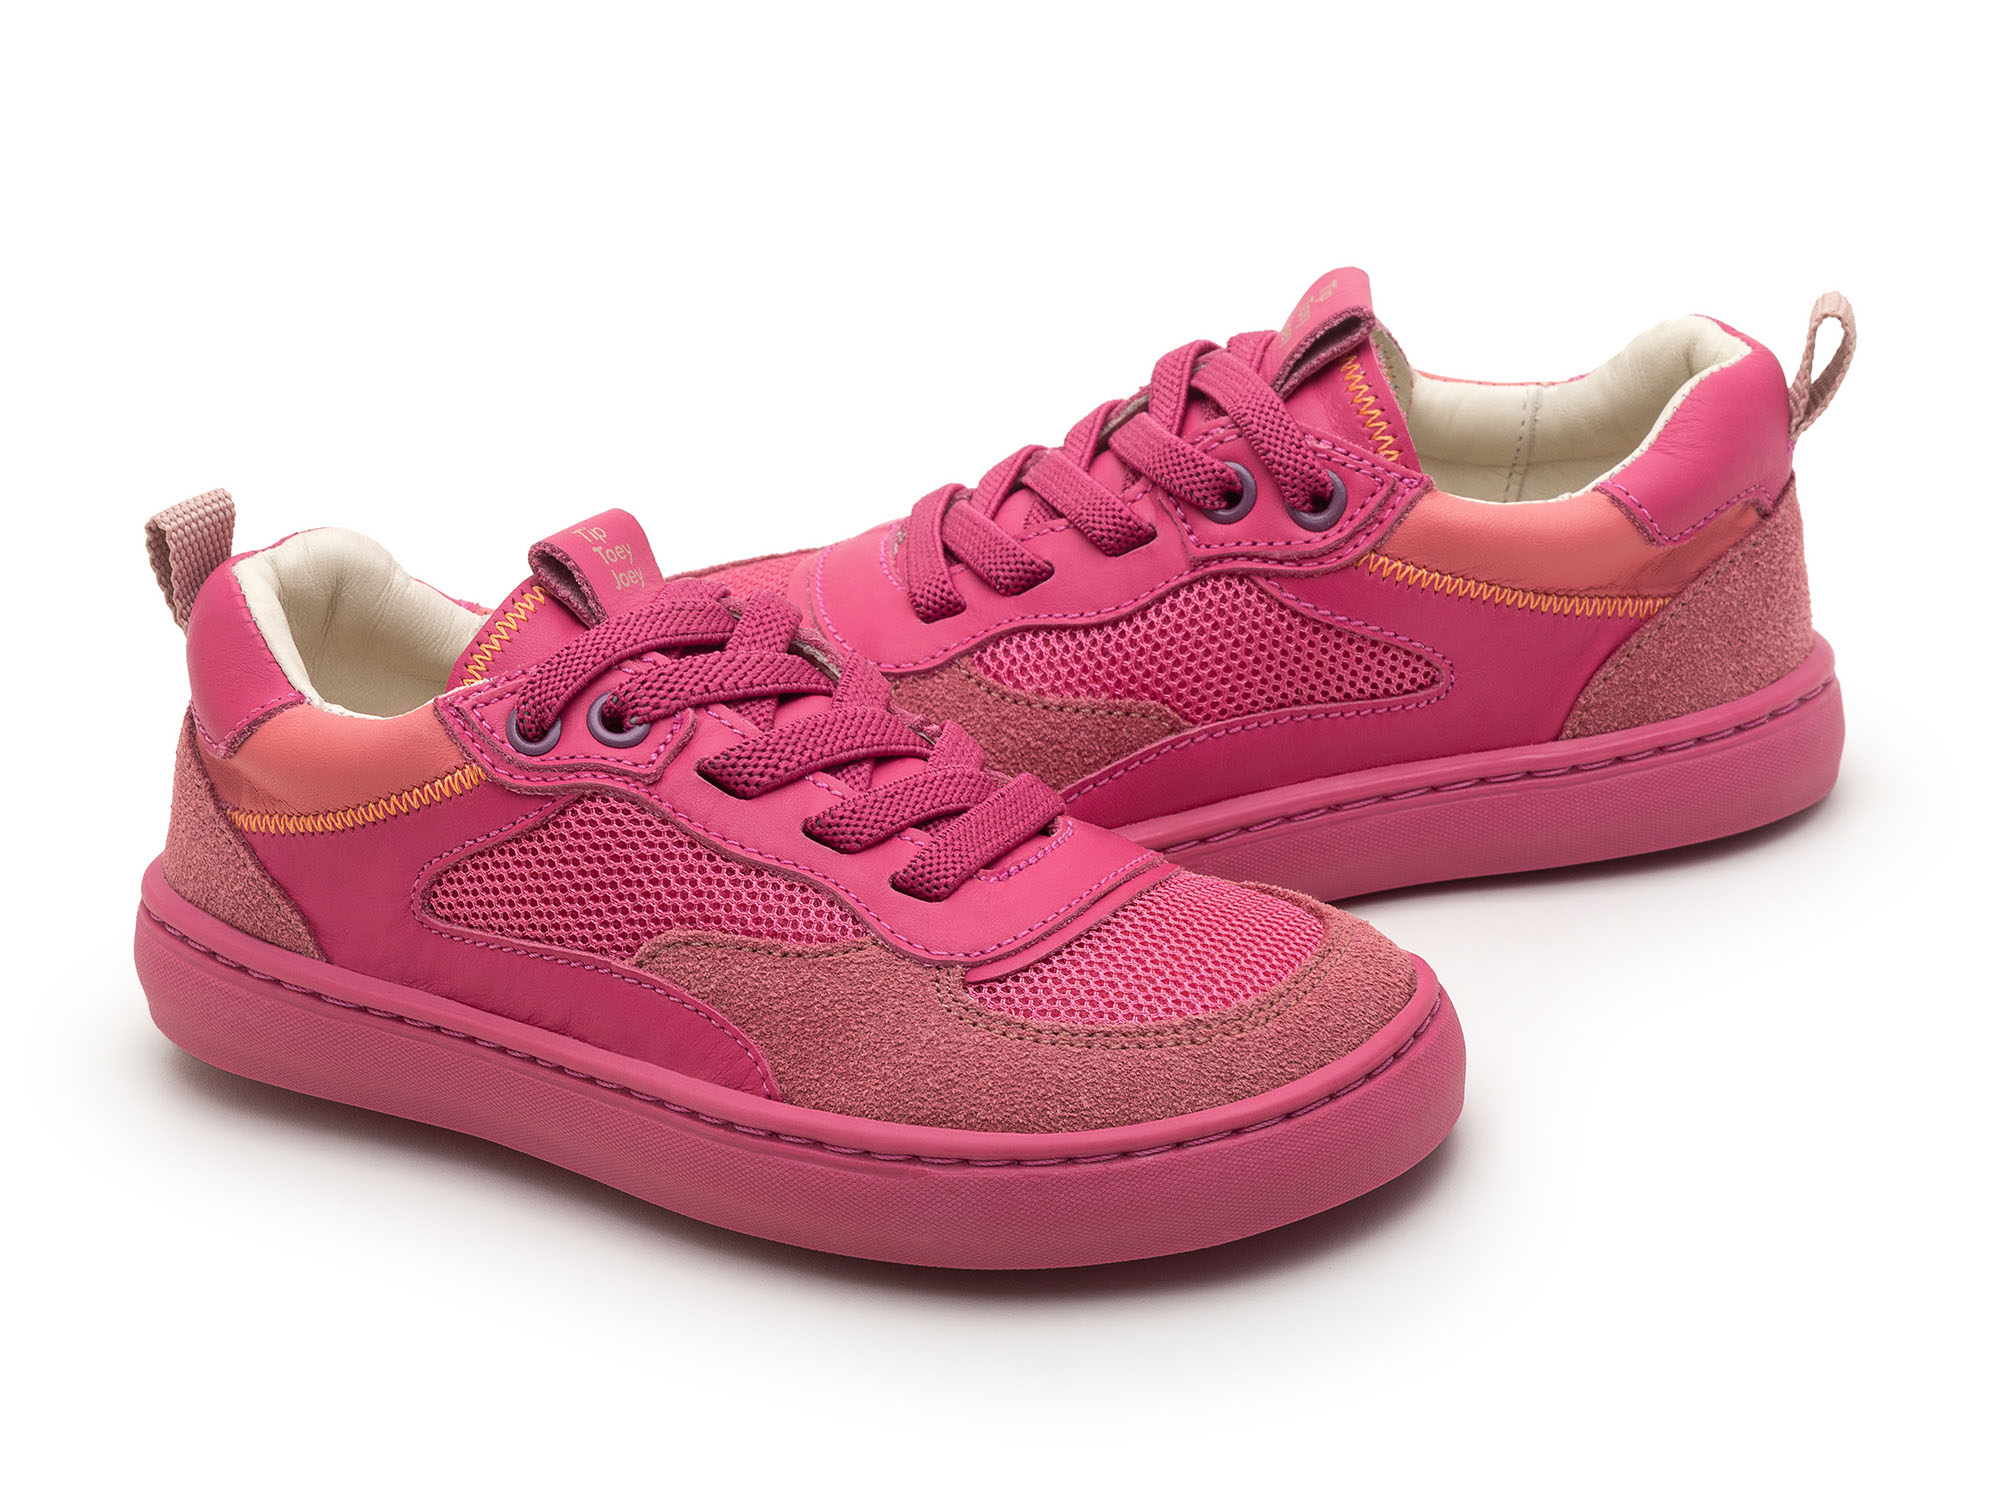 RUN & PLAY Sneakers for Girls Step | Tip Toey Joey - Australia - 4